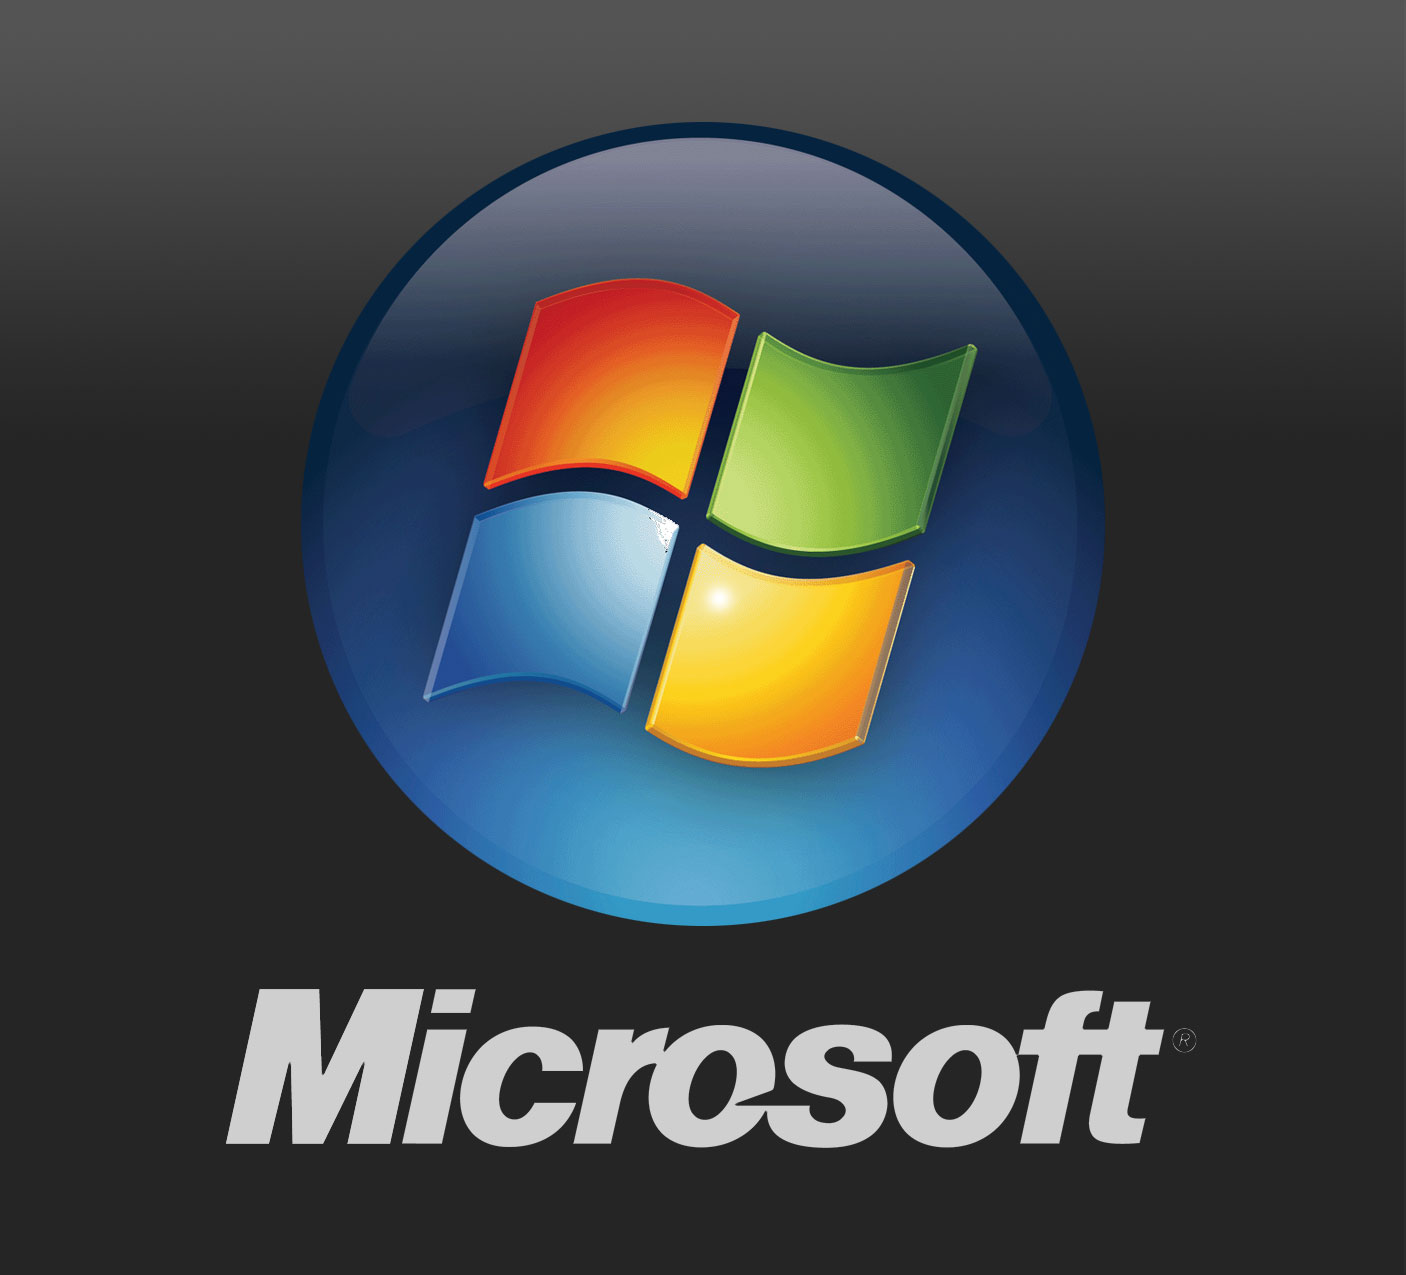 Microsoft windows license agreement : duccosi